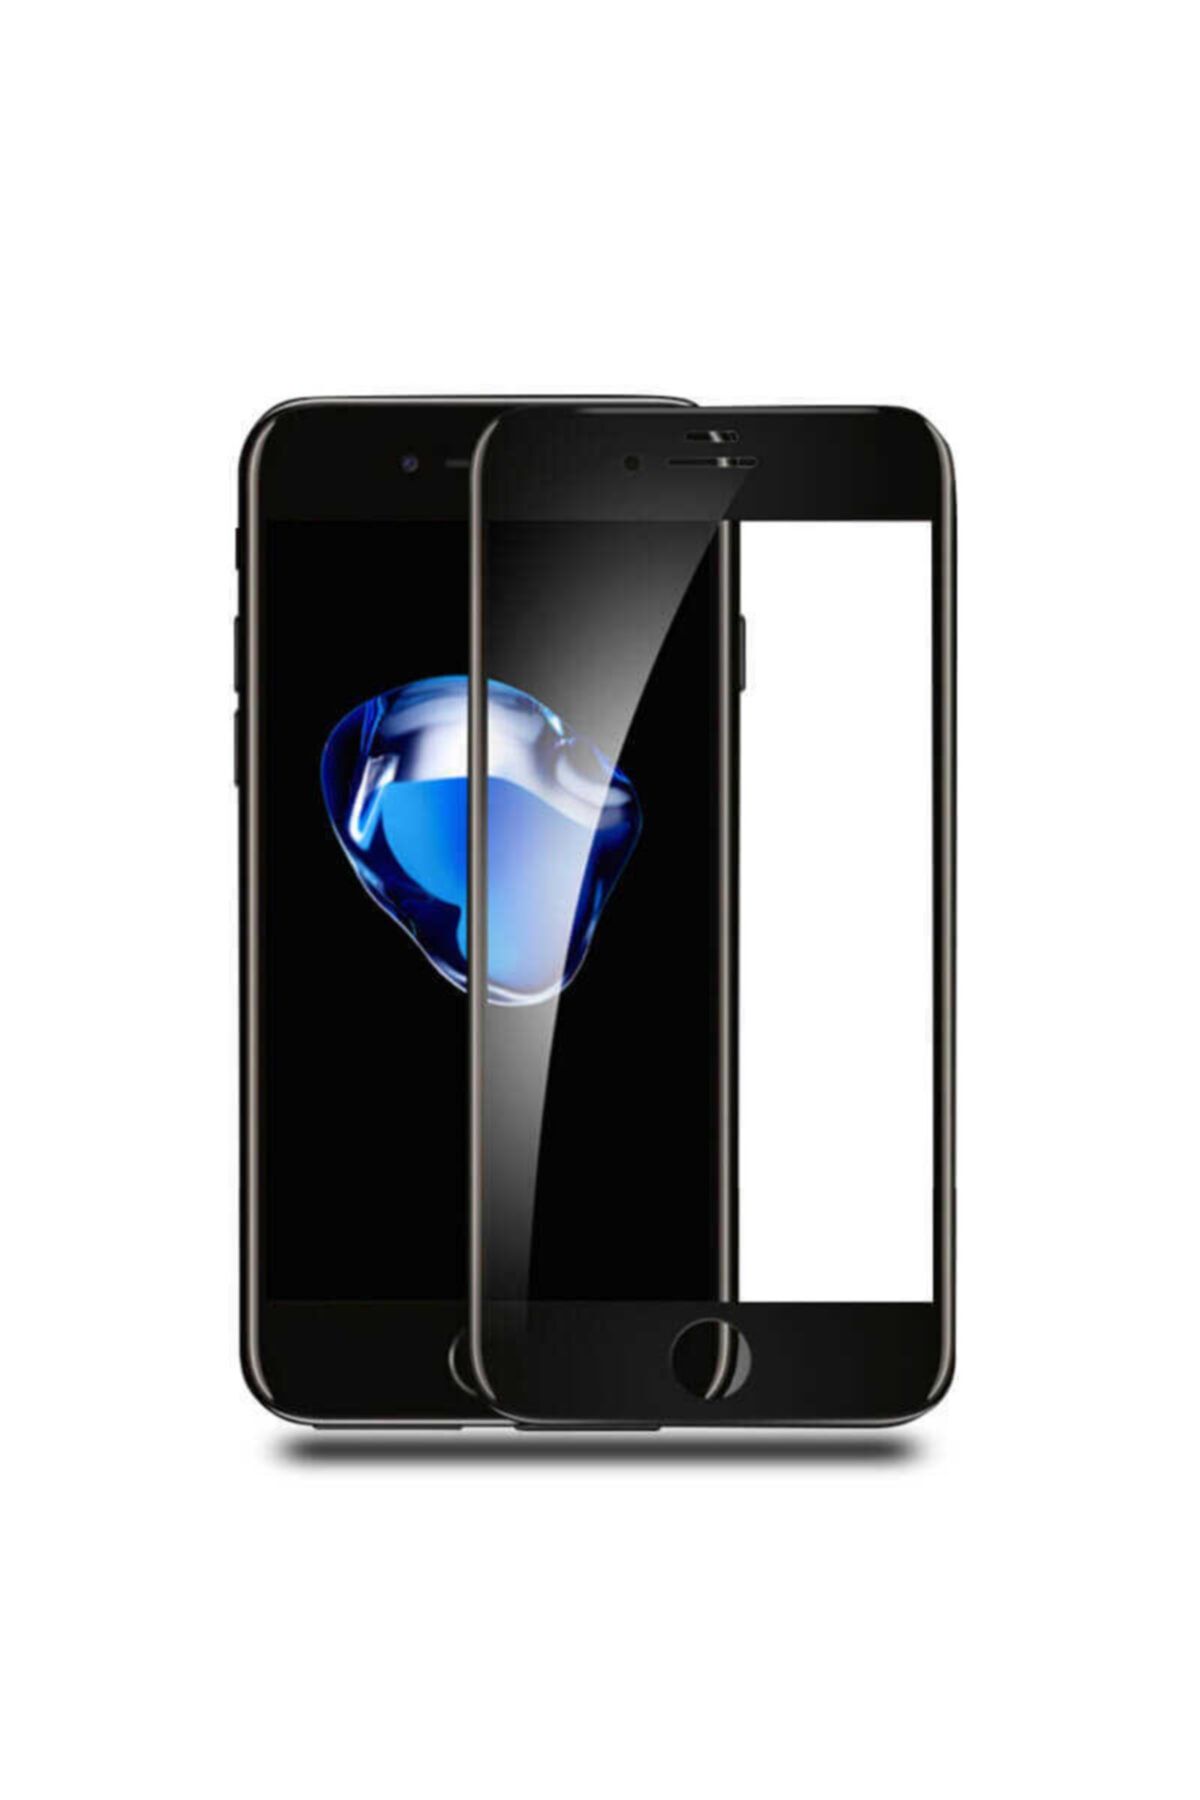 Fibaks Iphone 7 Siyah Ekran Uyumlu Tam Kaplayan Cam 5d Ekran Koruyucu